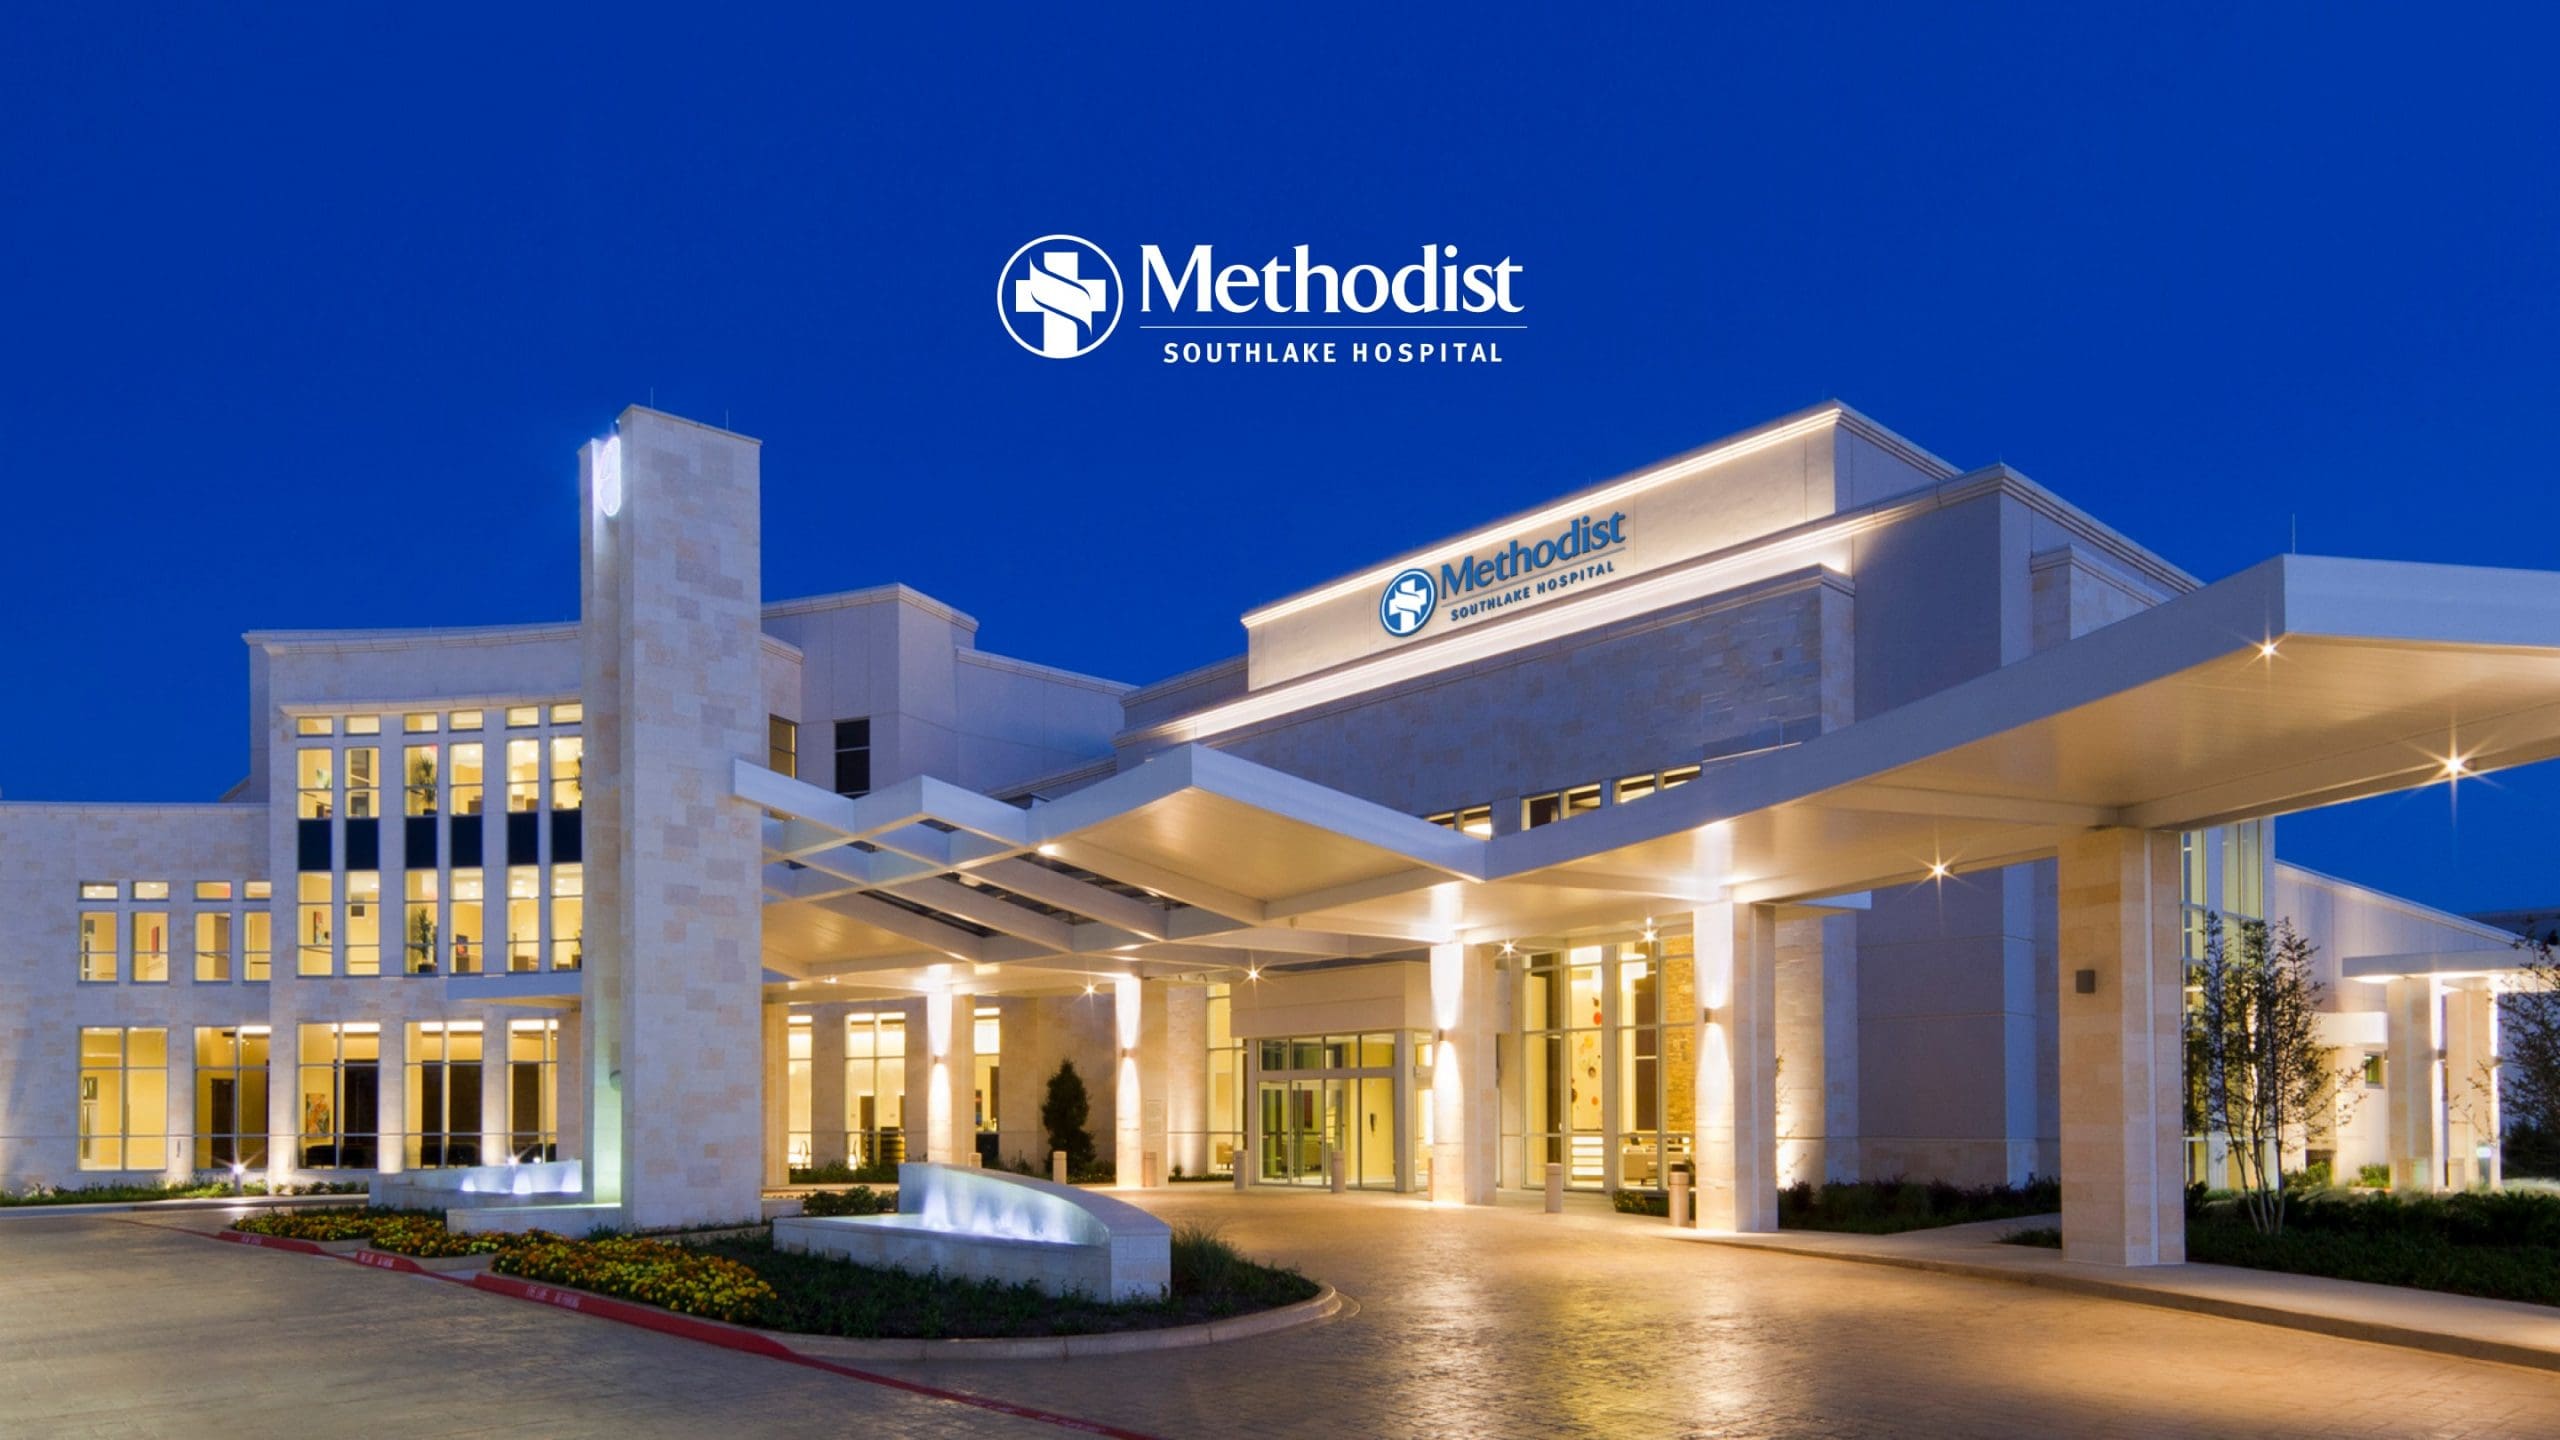 Hospital Marketing Case Study - Methodist Southlake Hospital - Agency Creative Dallas